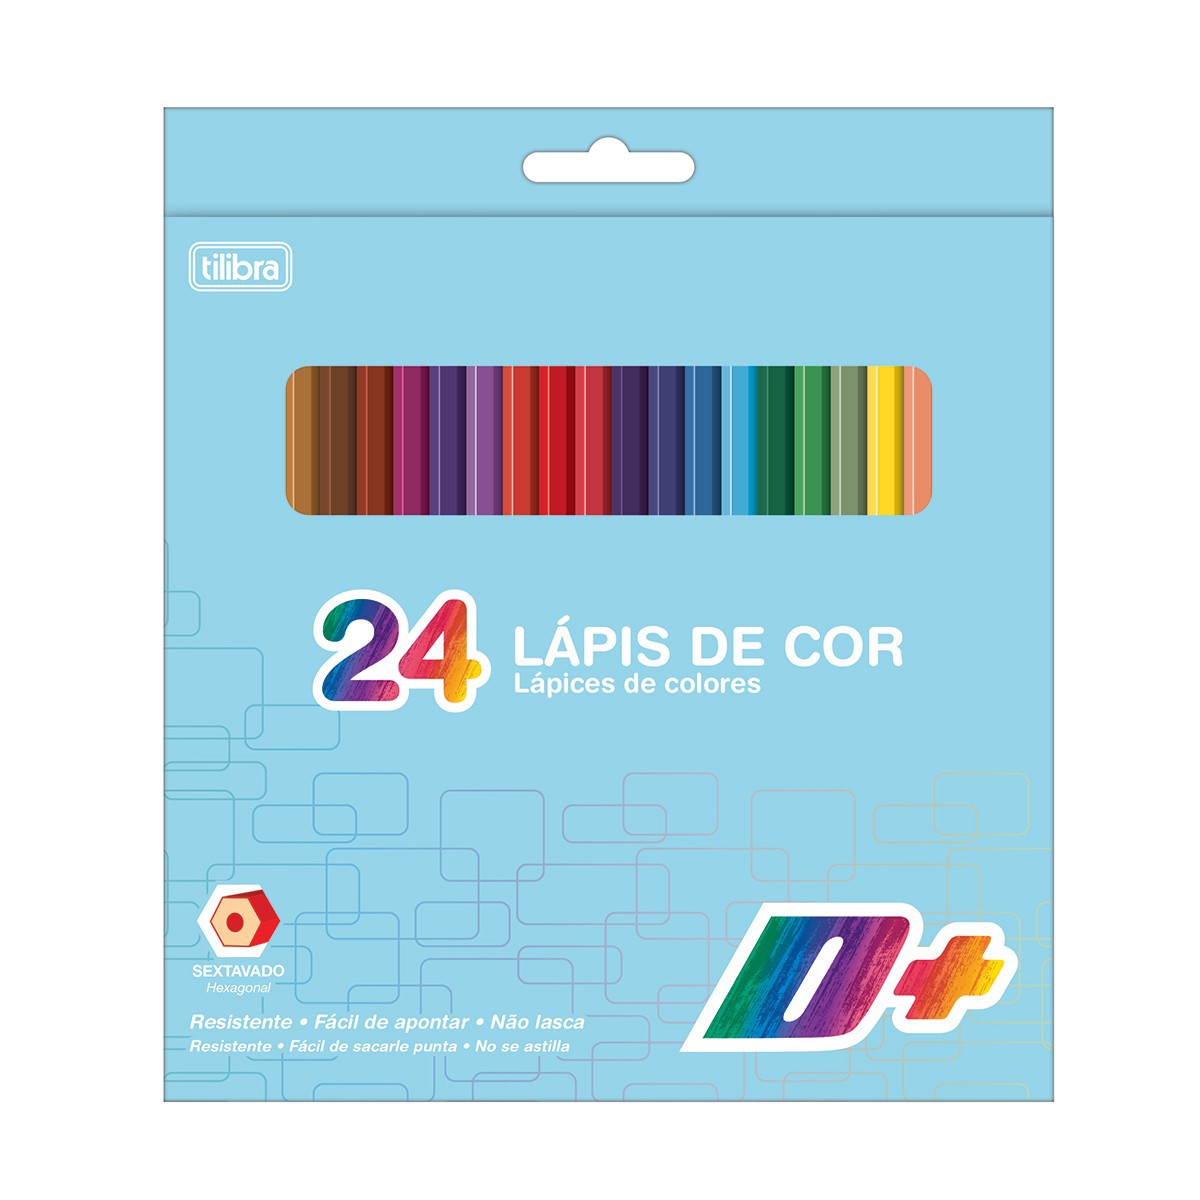 Lápis de Cor Sextavado D+24 cores - Milca webstore